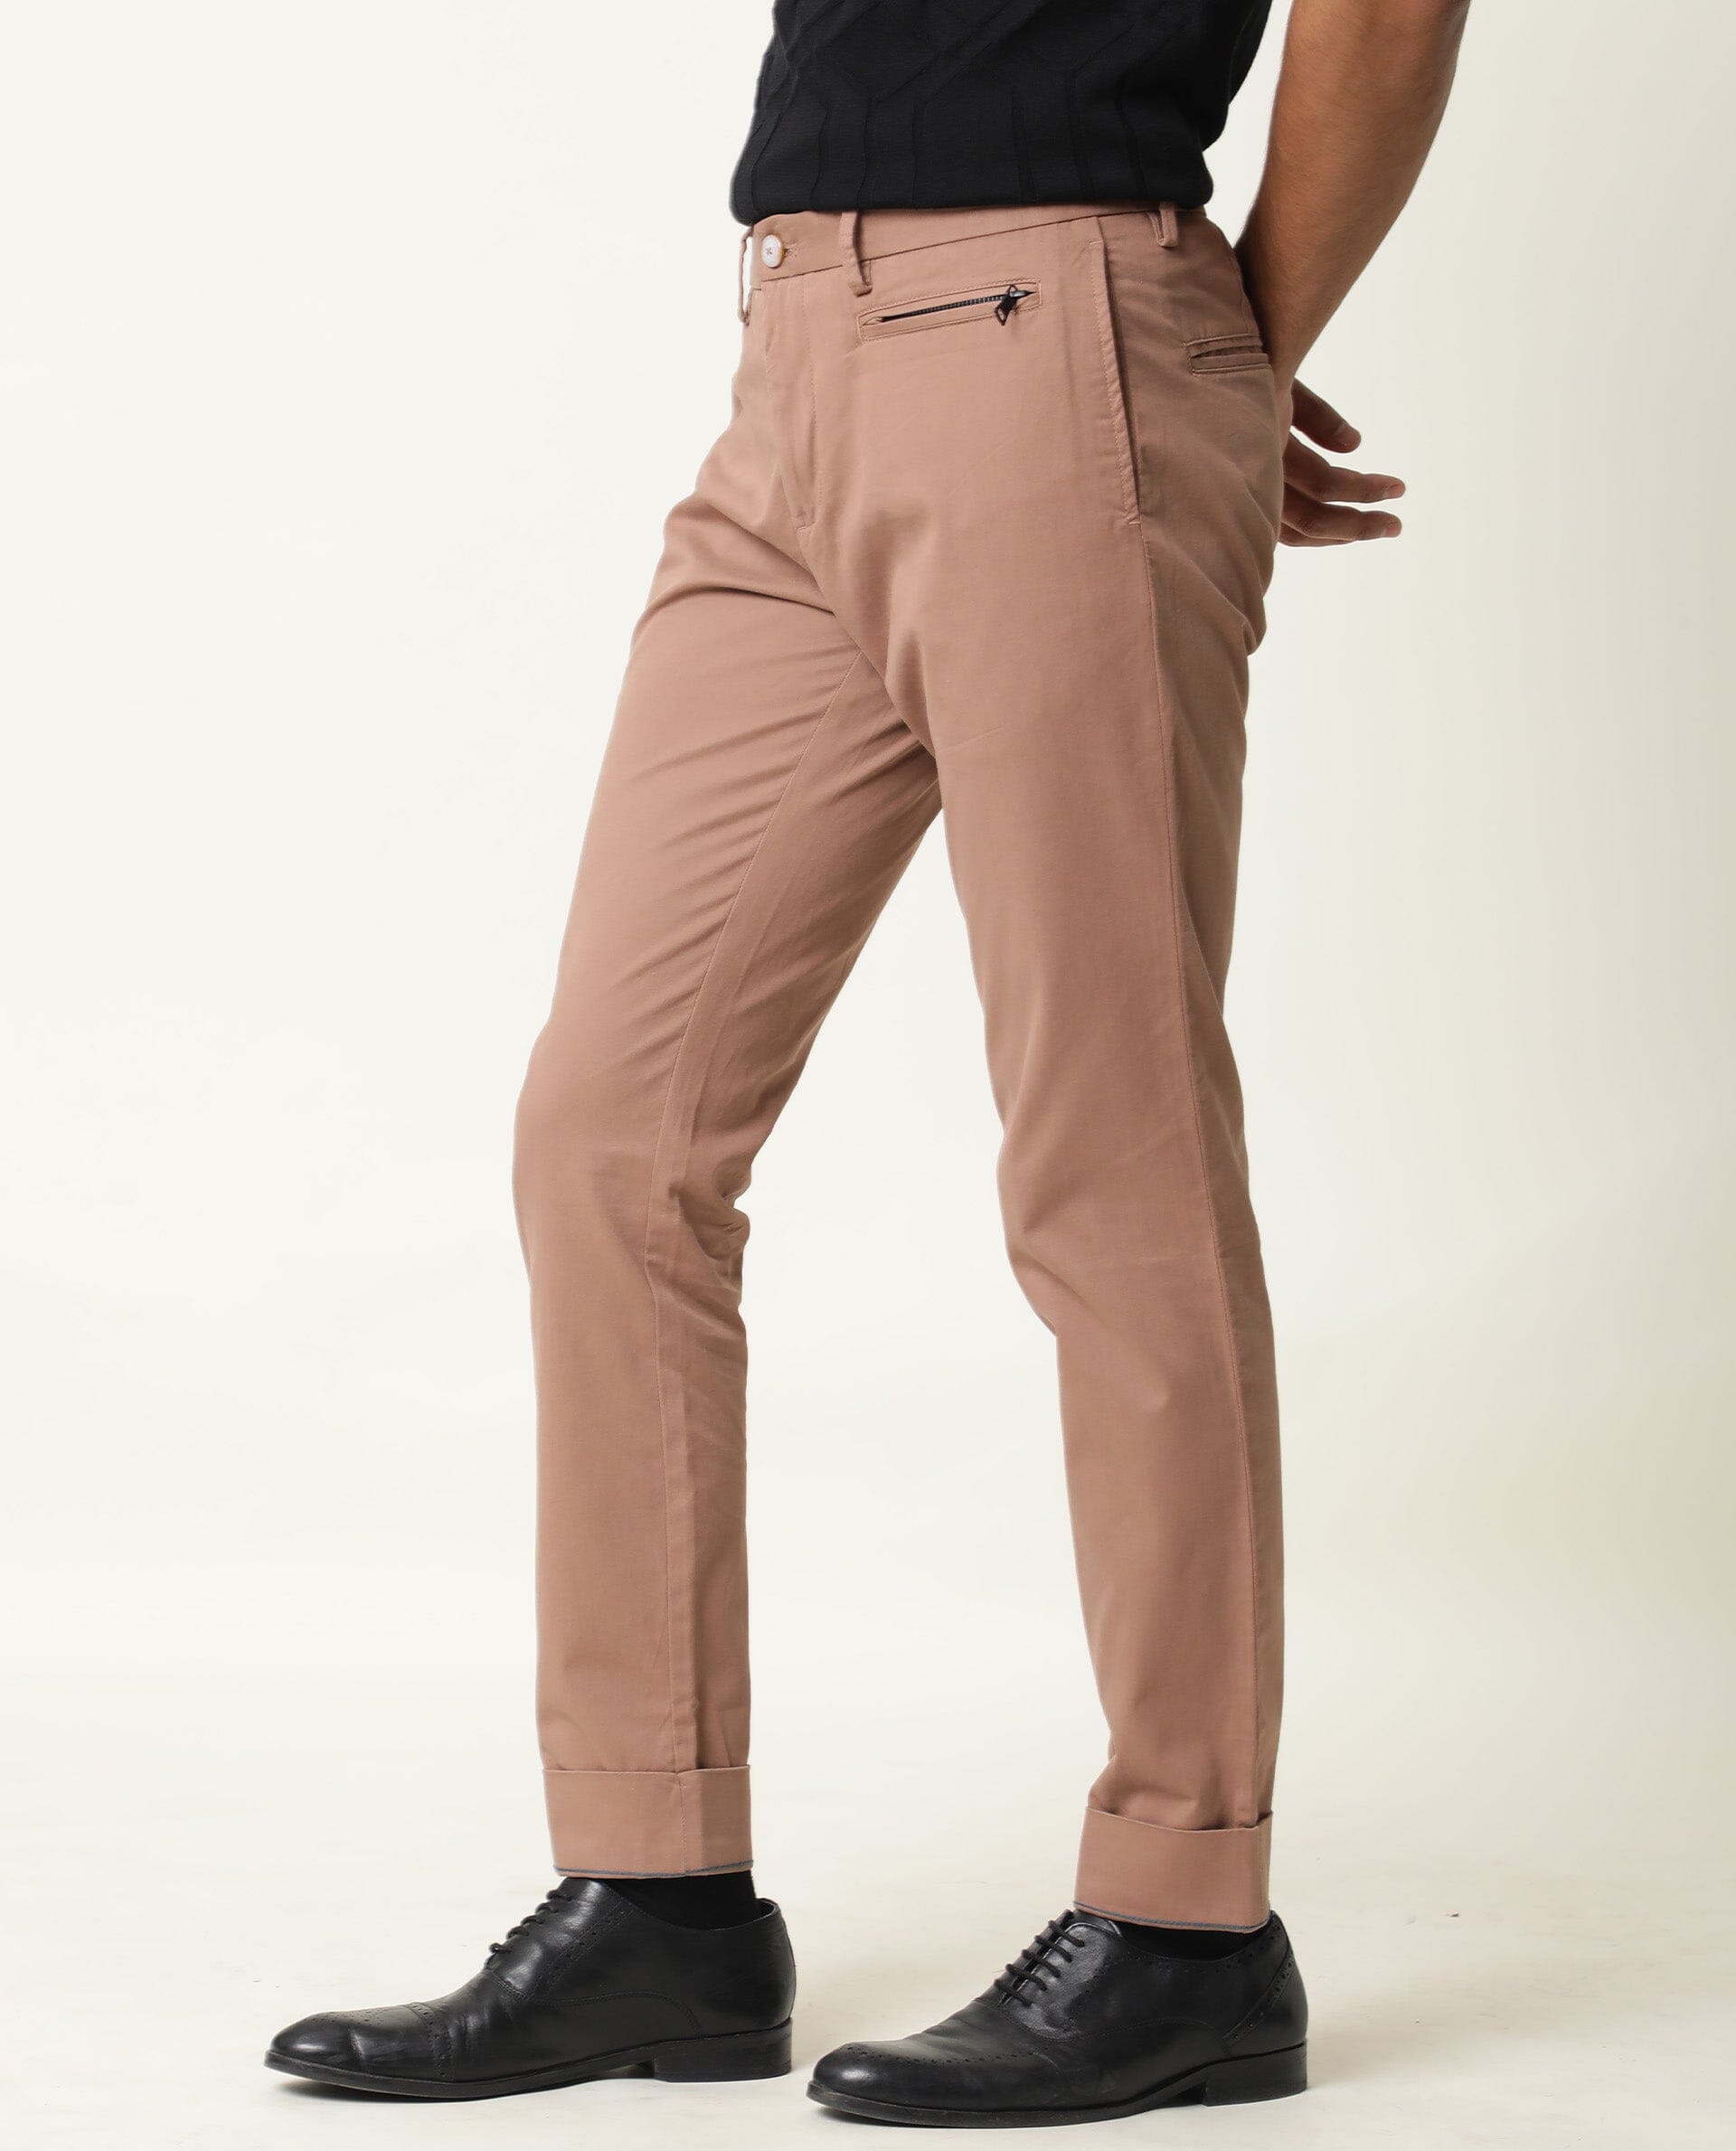 Heathered Light Brown Pant | Brown pants, Heathered, Casual shirts